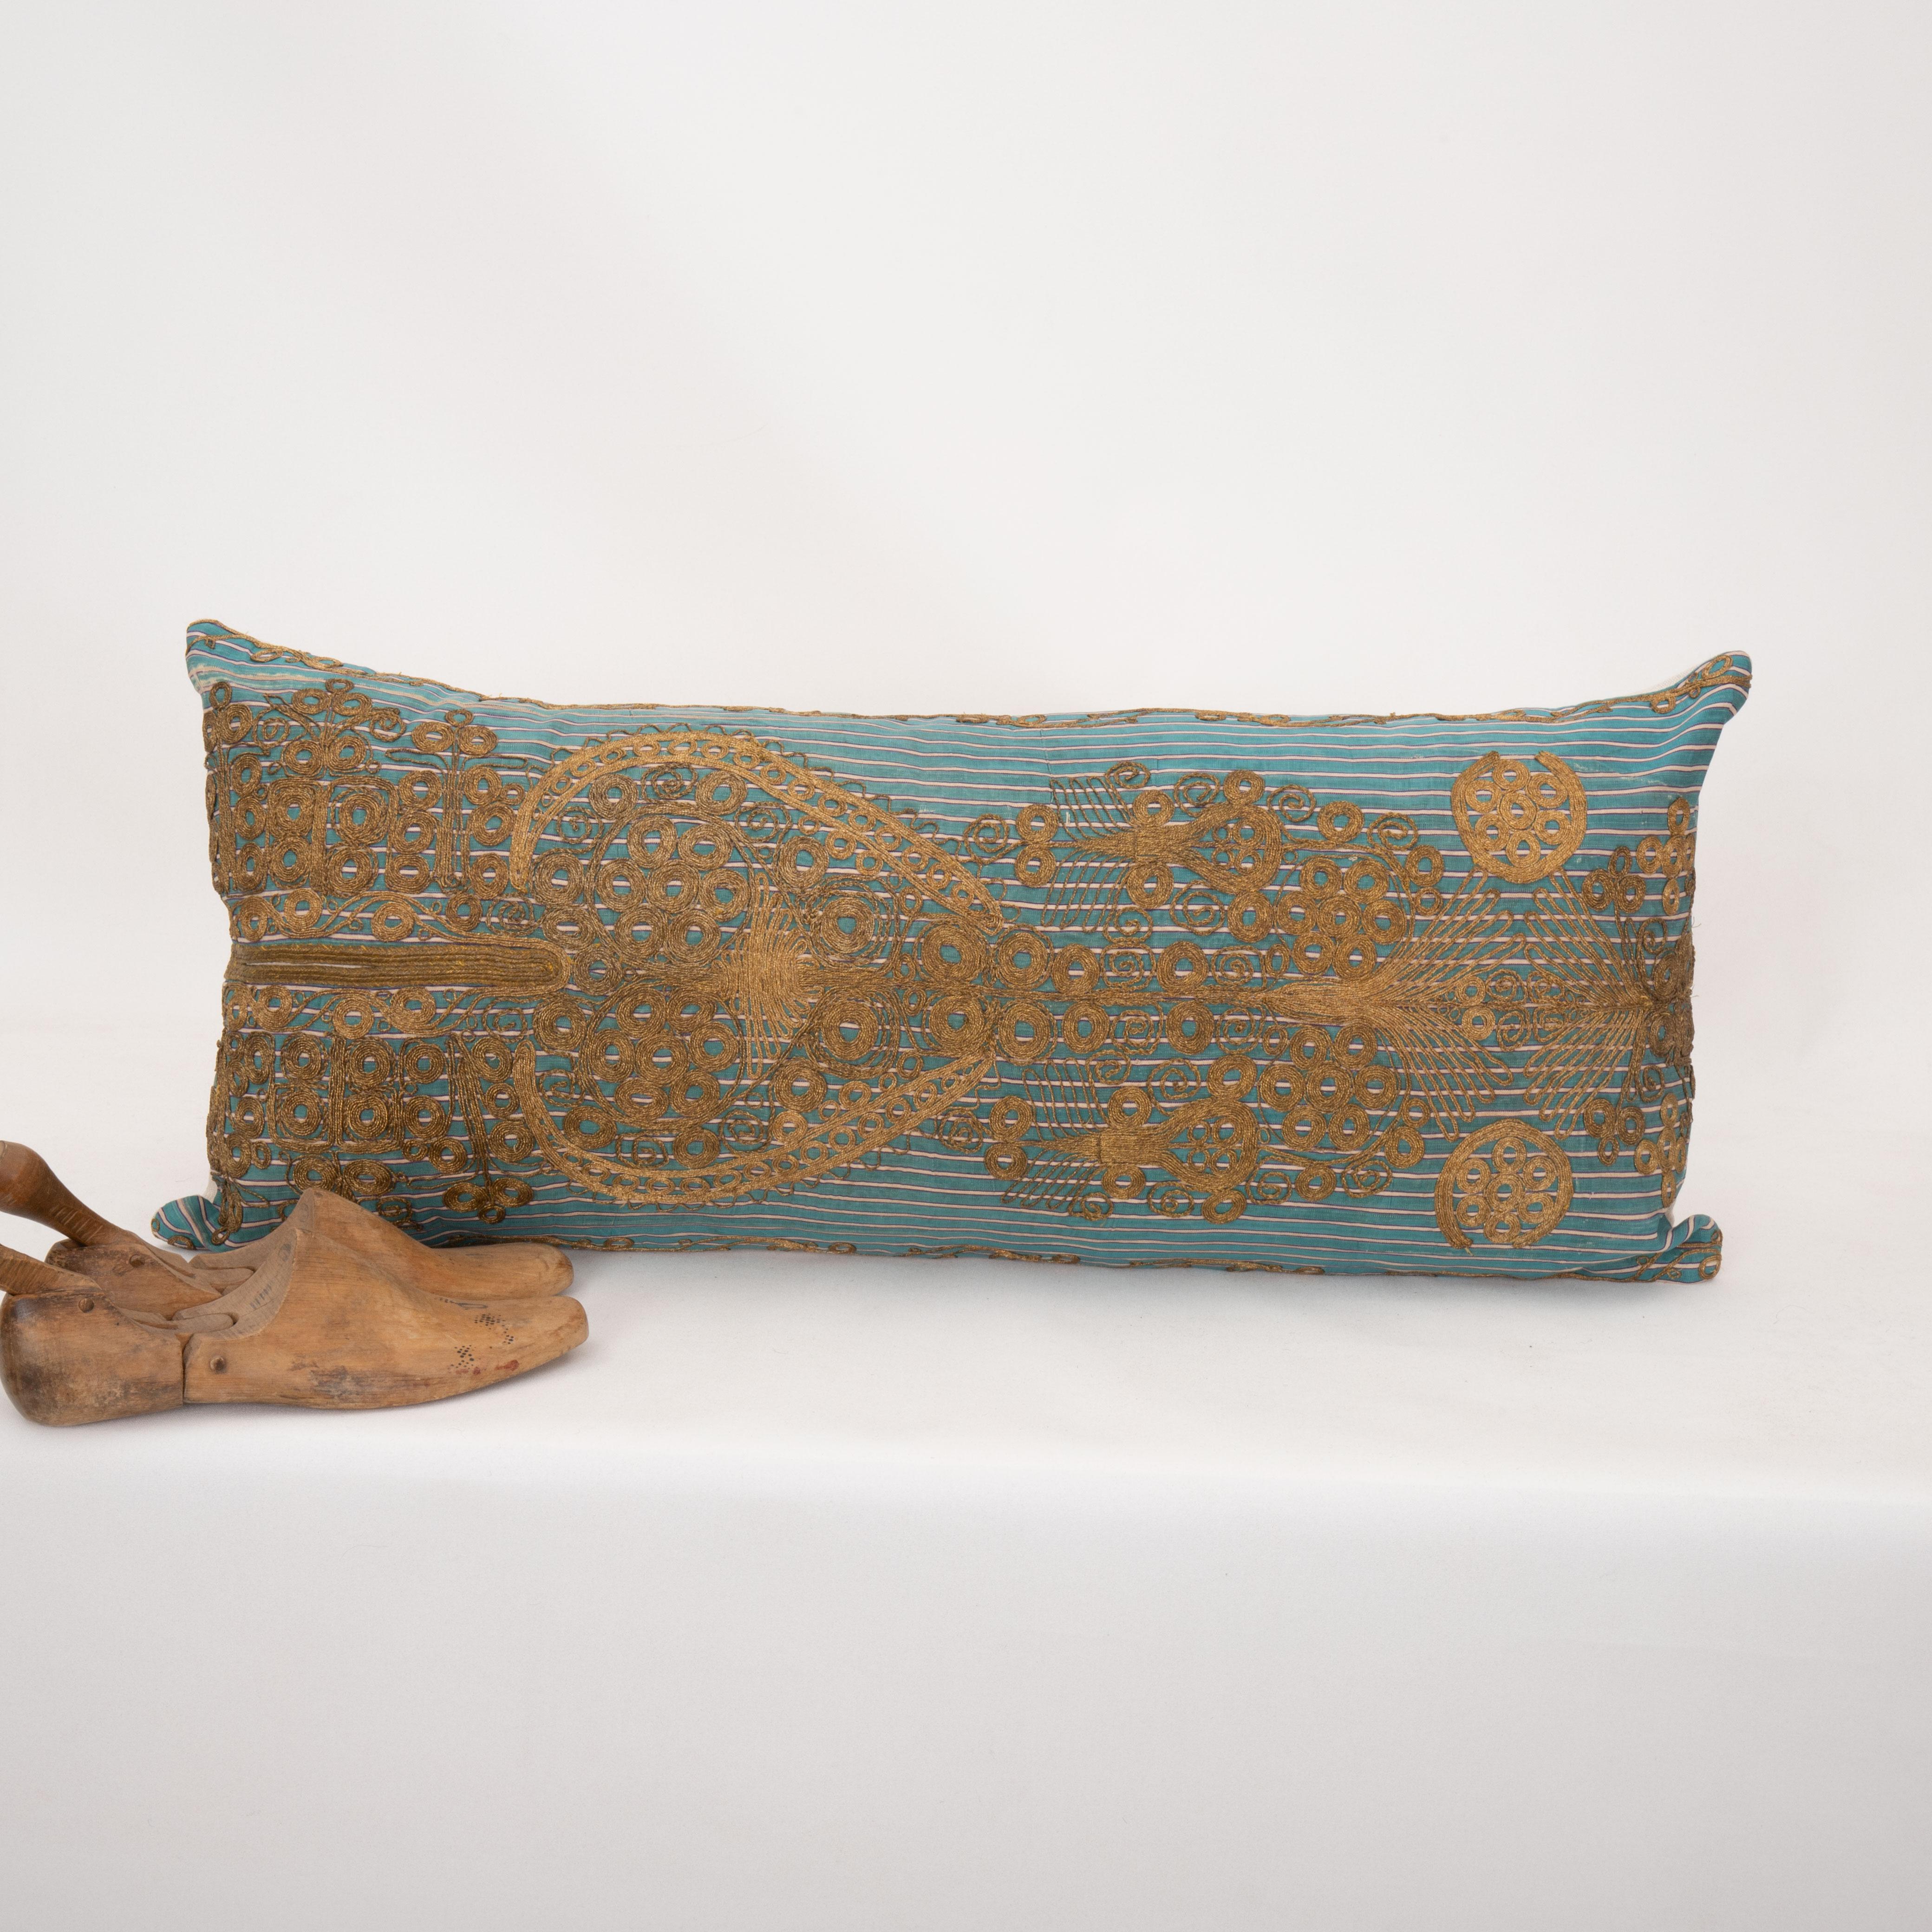 Folk Art Antique Ottoman Turkish Pillow Case, Early 20th C.